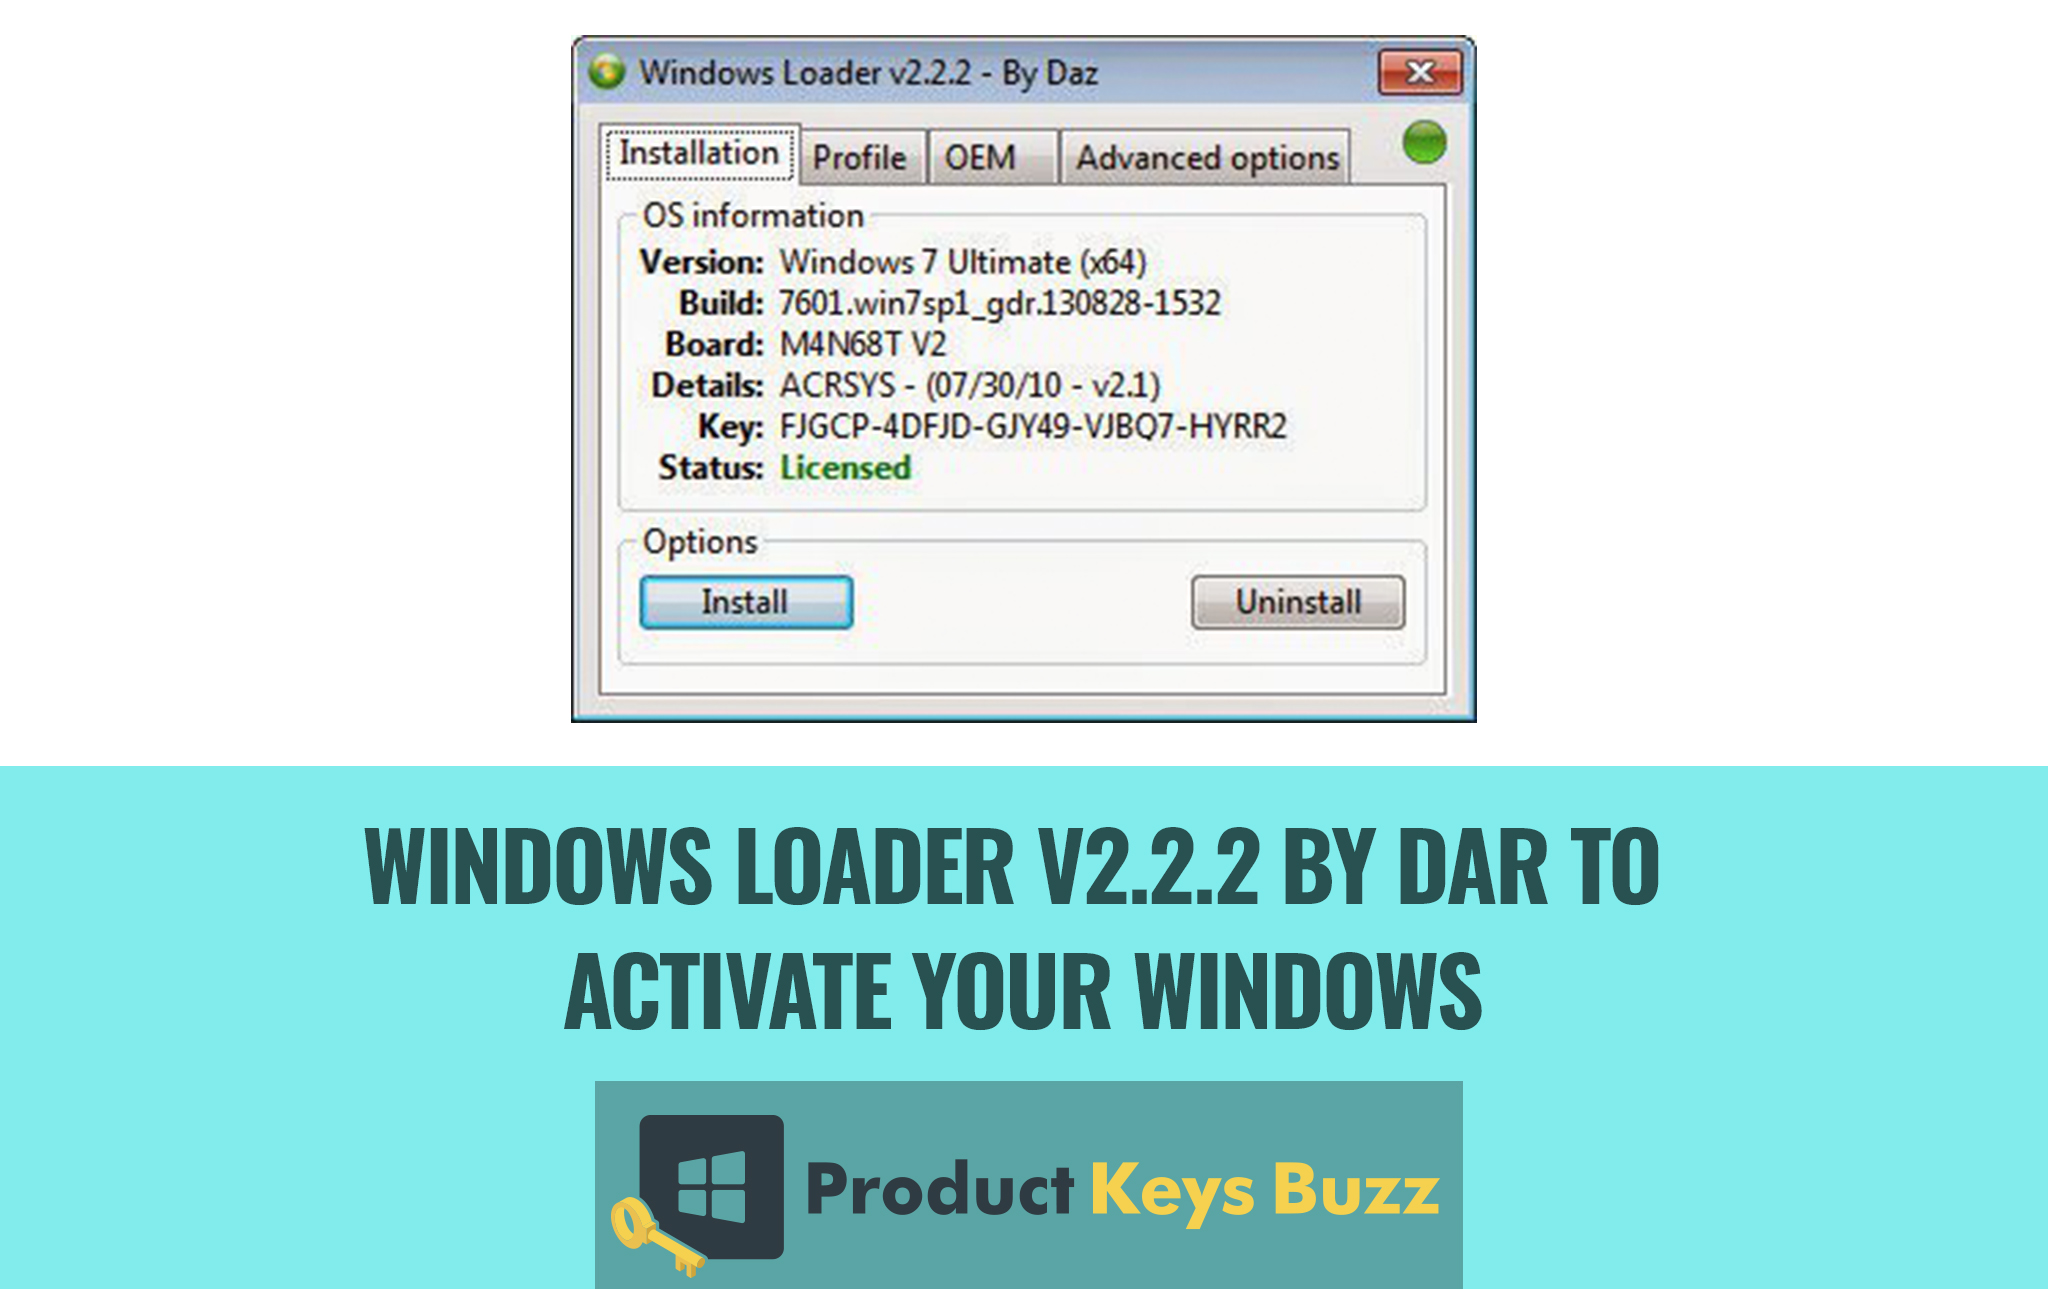 Активатор 7 loader. Windows Loader. Windows Loader by Daz. Активатор Windows 7 Loader by Daz. Windows Loader 2.2.2 by Daz.